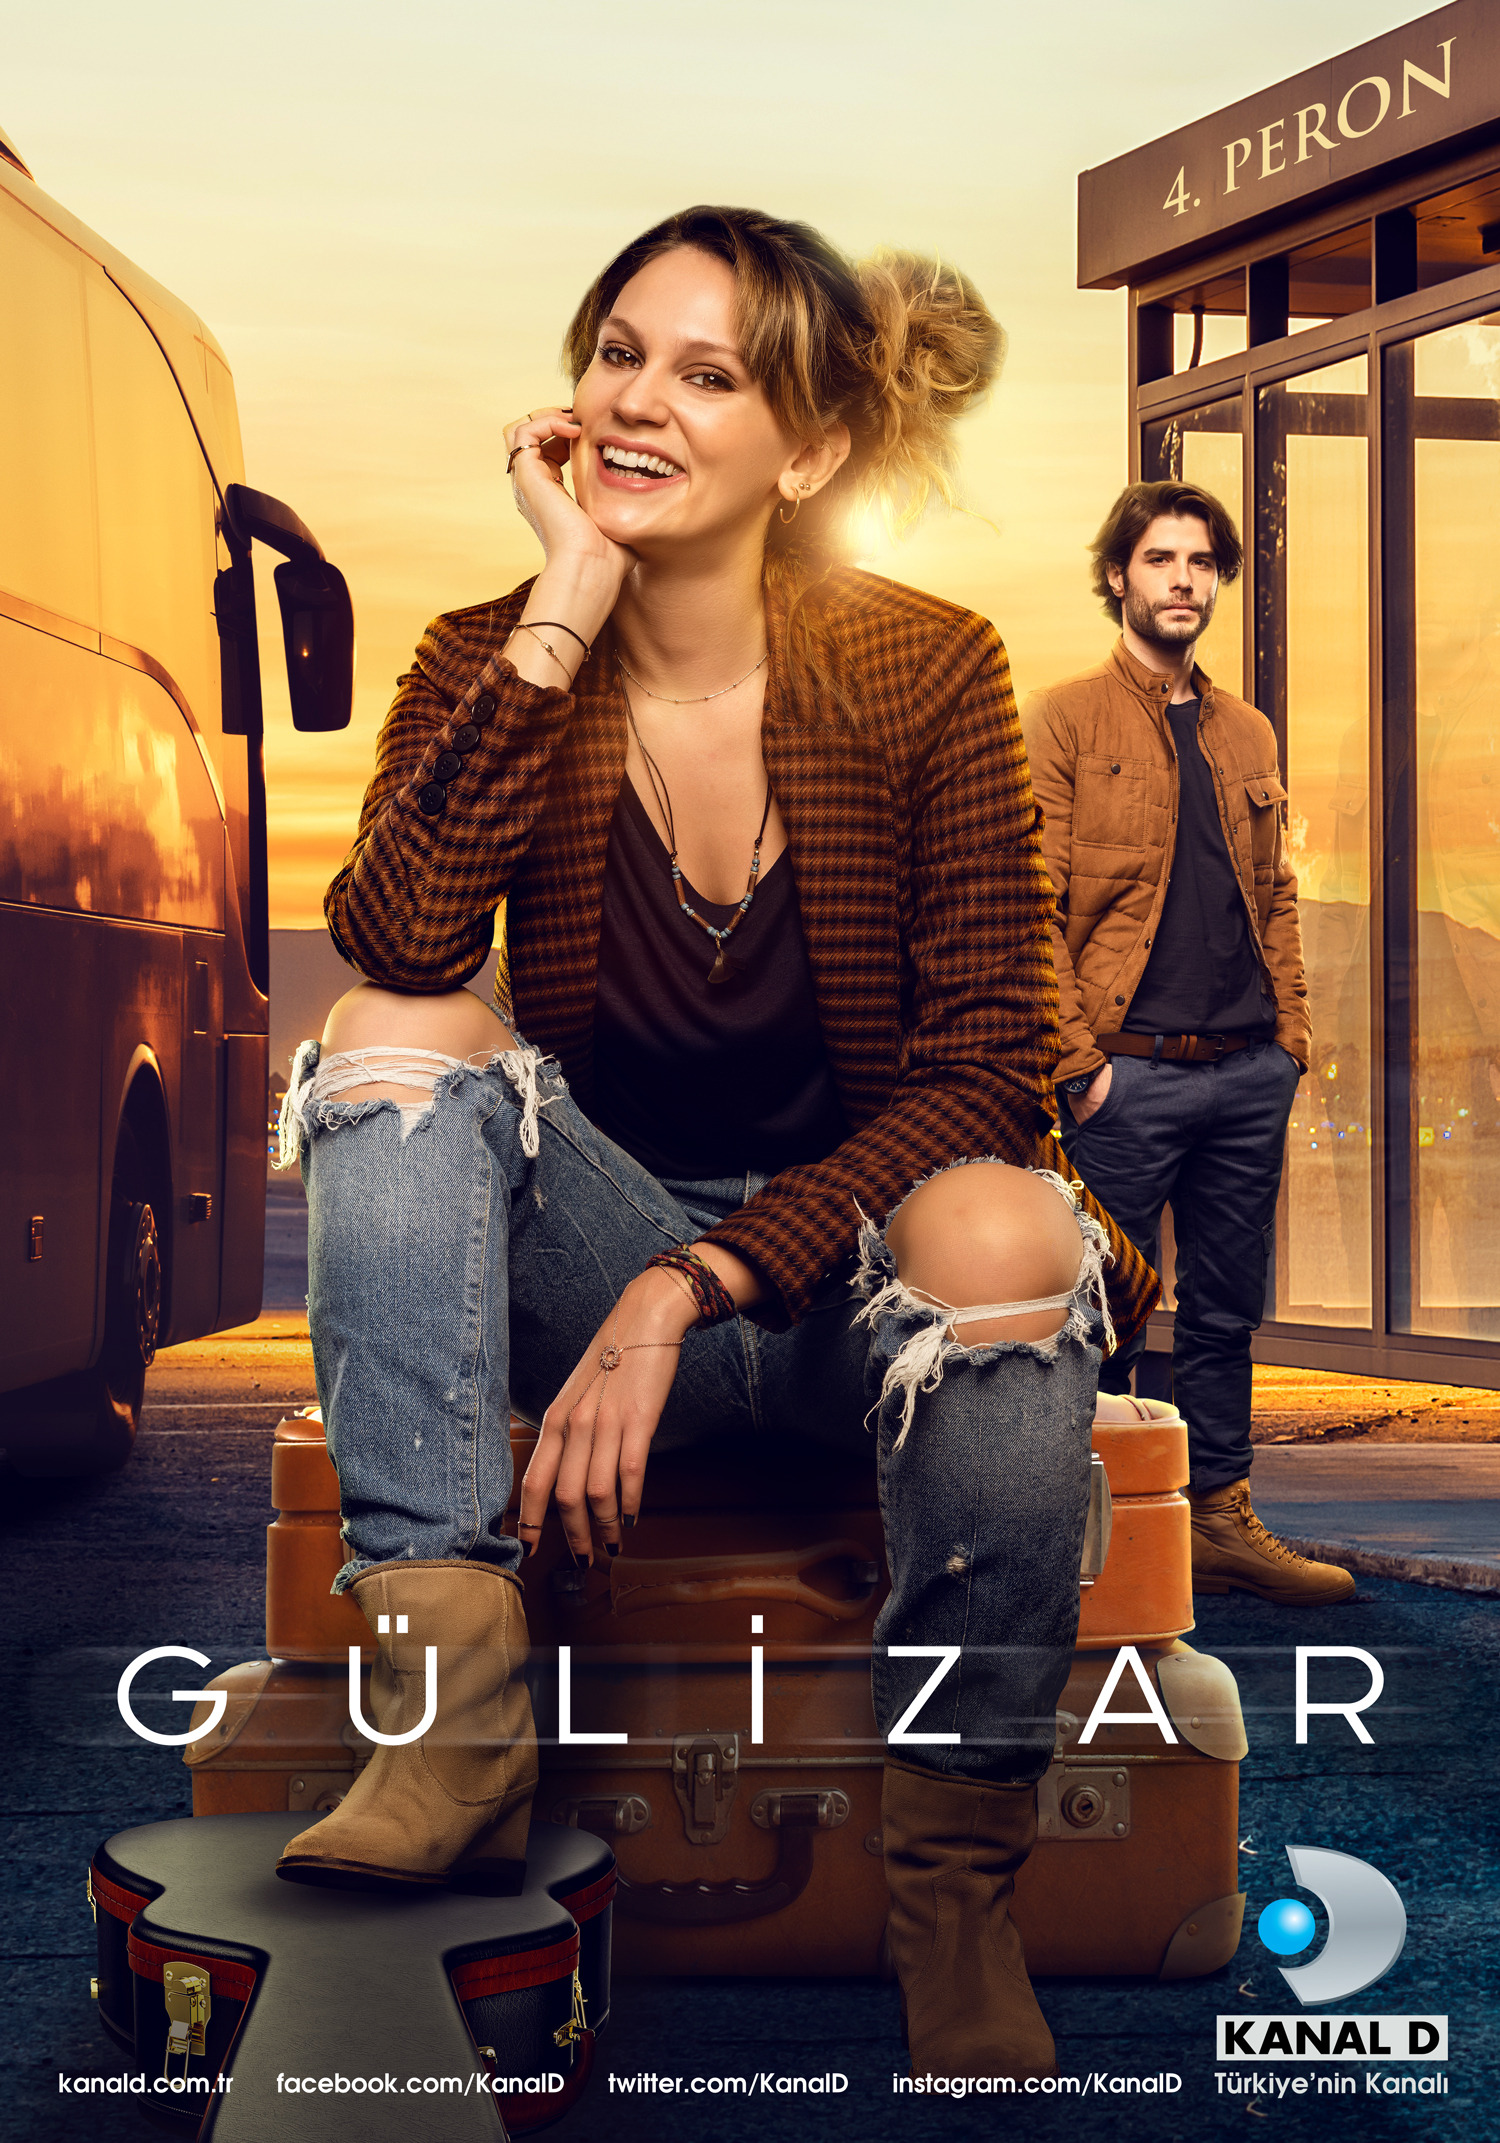 Mega Sized TV Poster Image for Gülizar (#1 of 2)